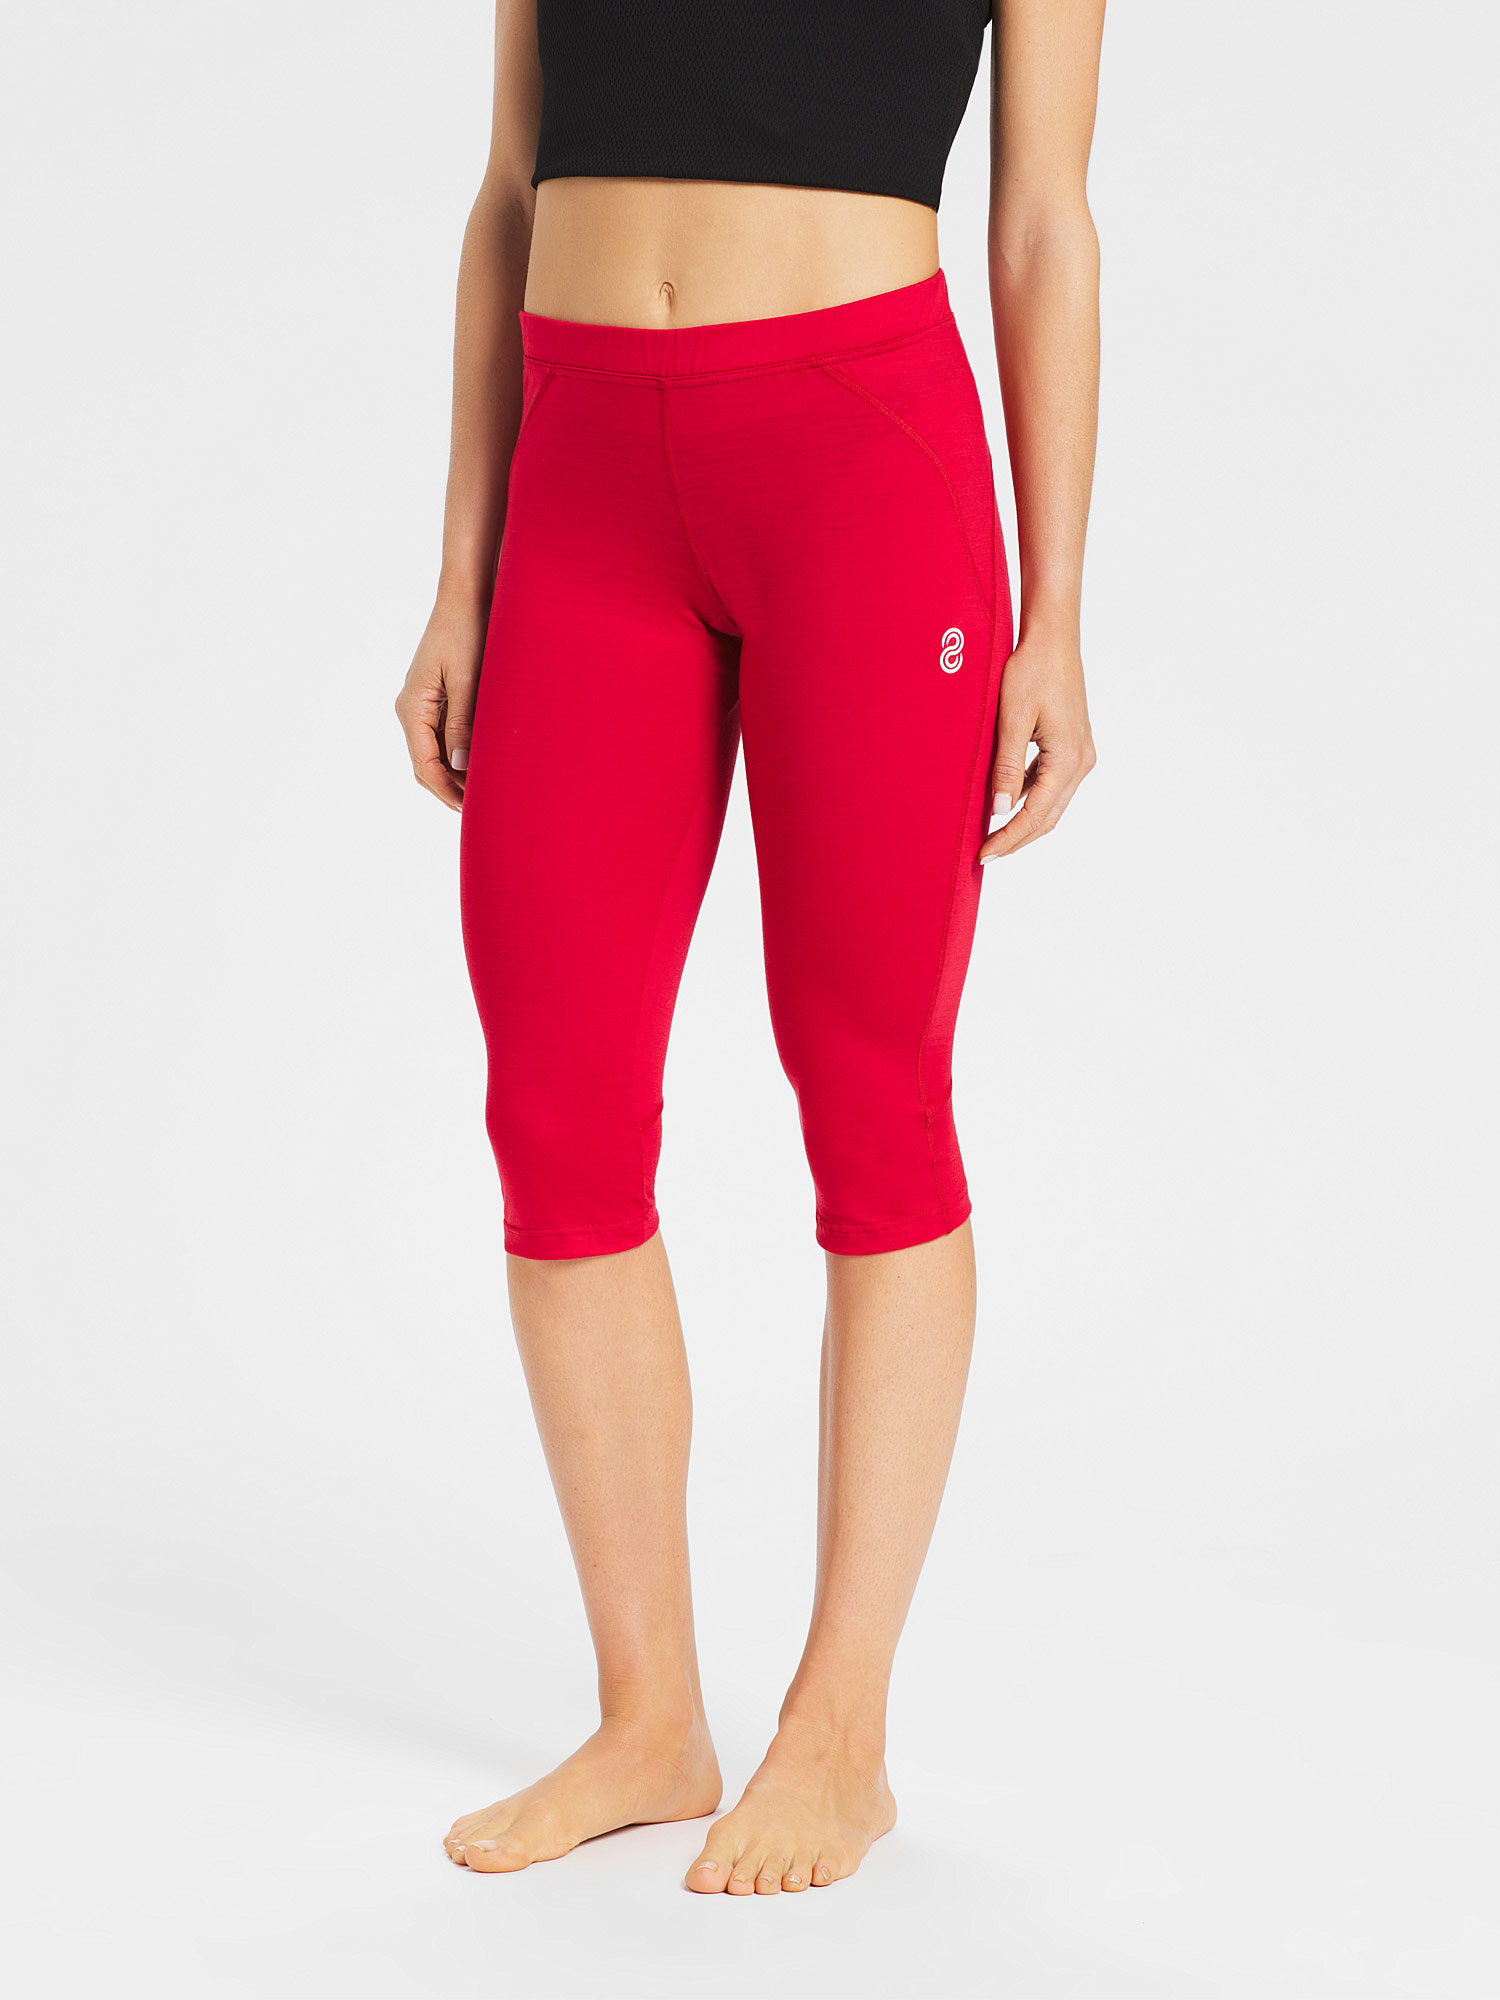 RACE - red merino jersey 190 gr leggings 3/4 for woman, Rewoolution